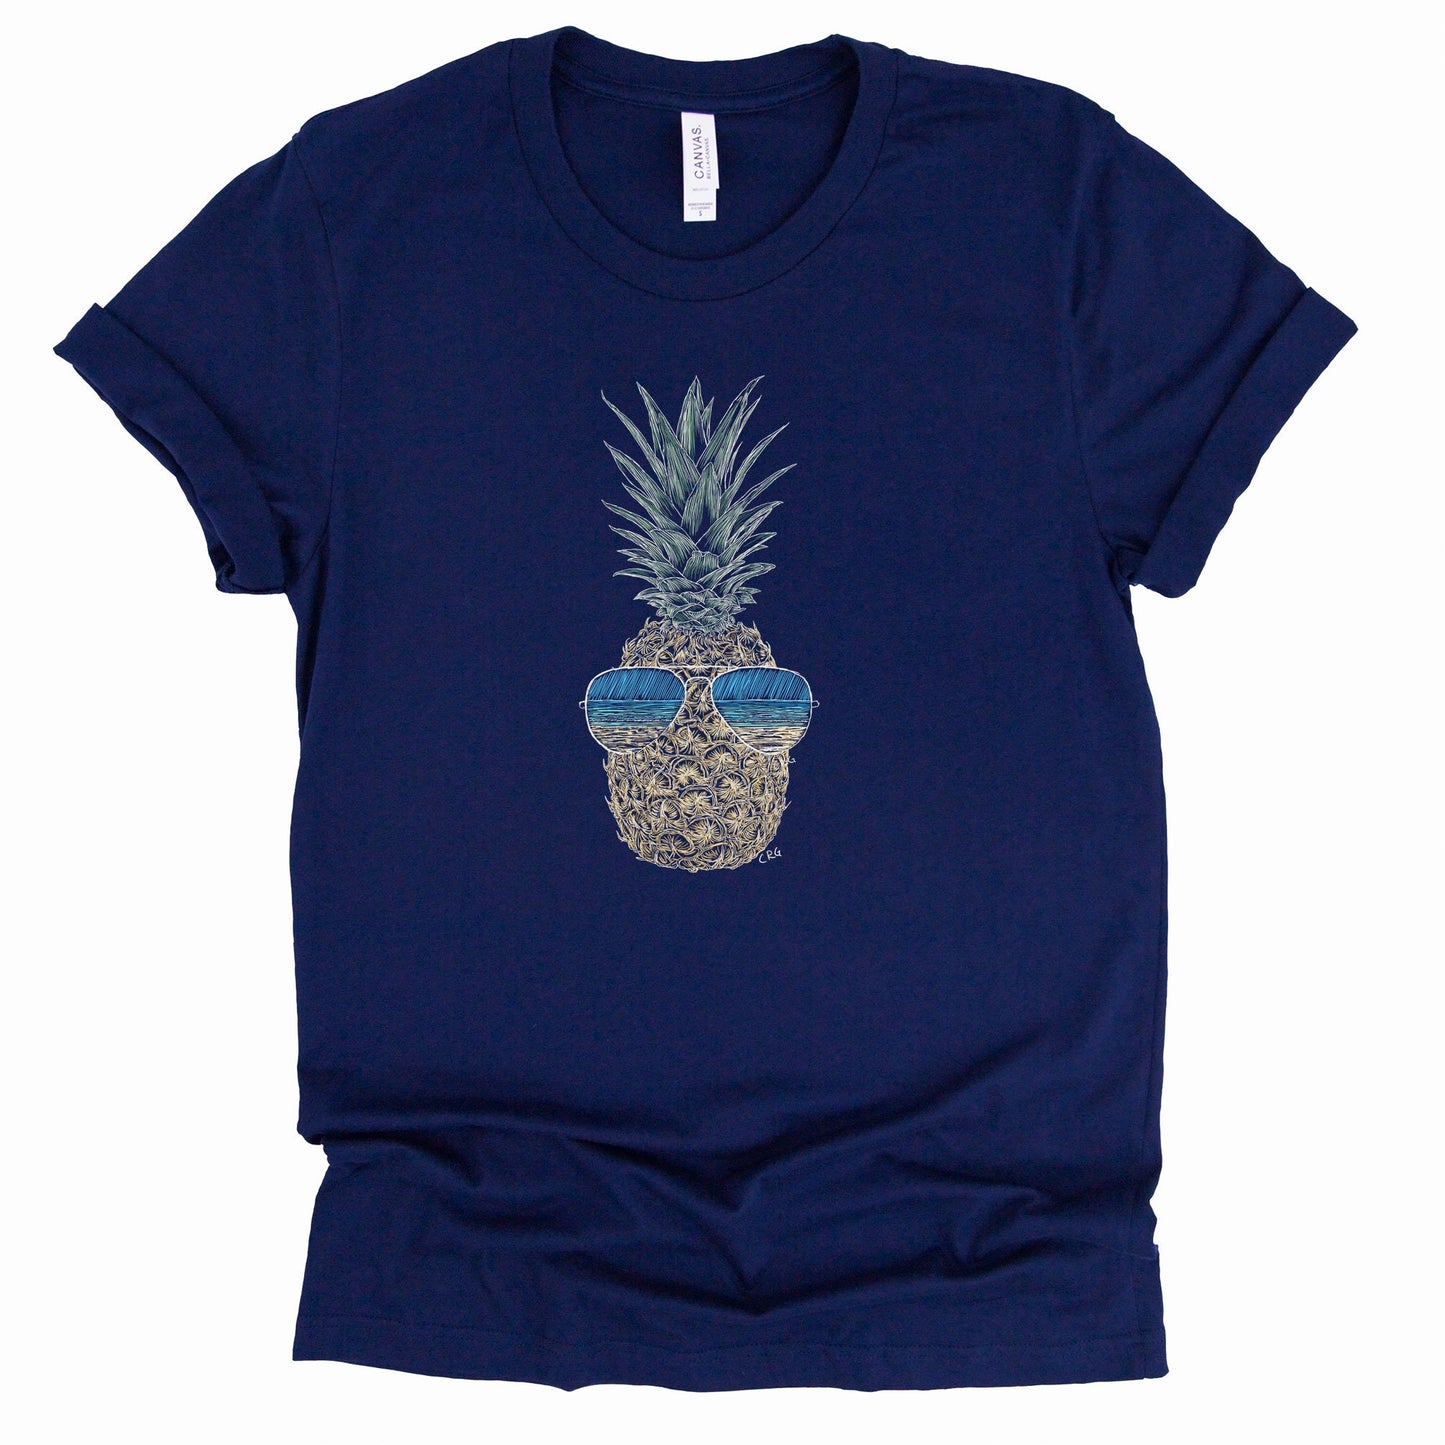 Pineapple with Sunglasses Shirt